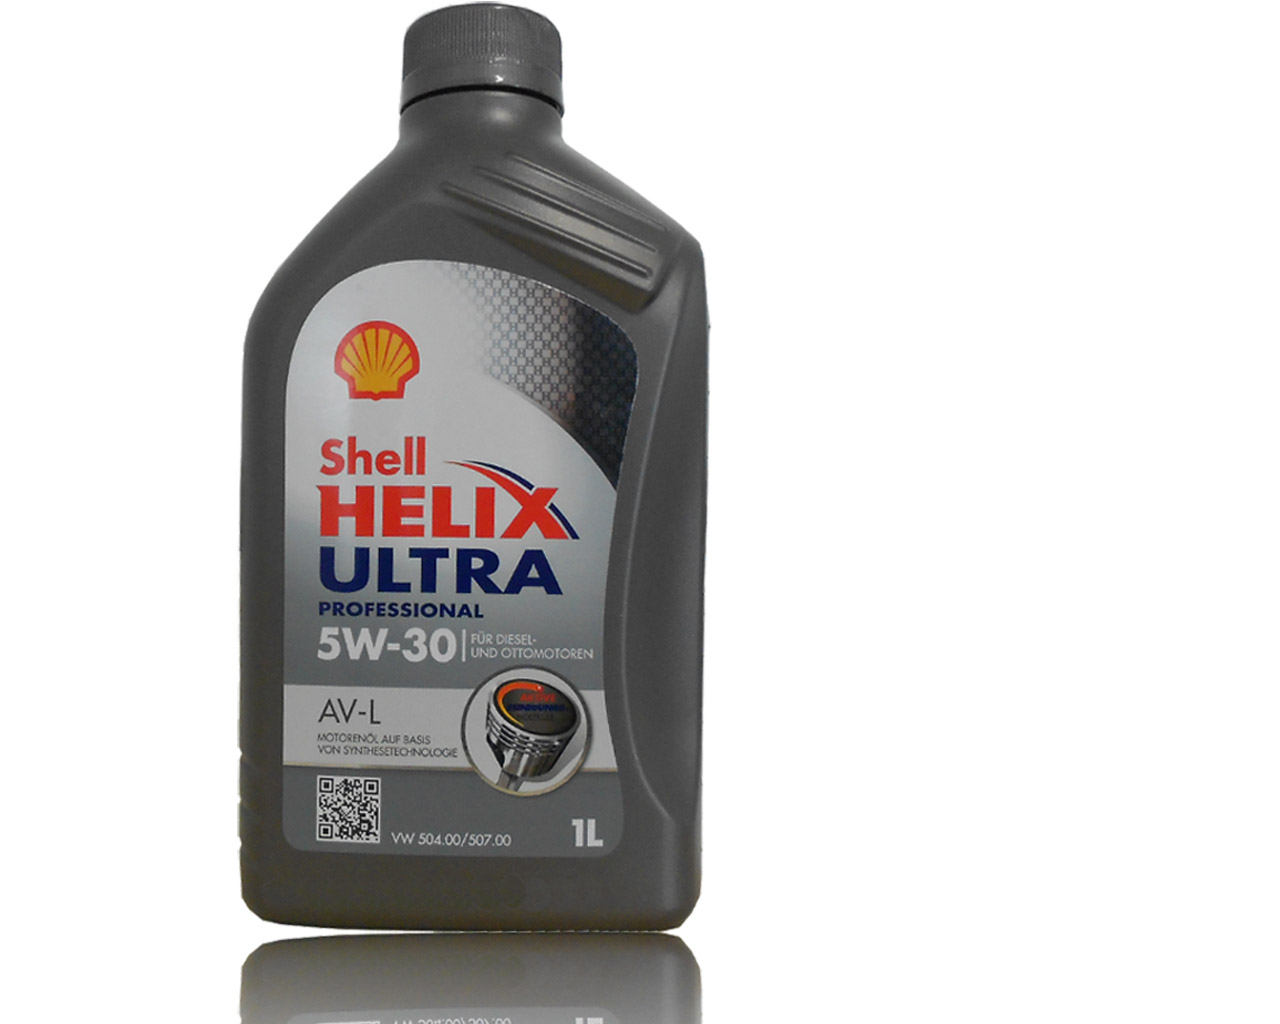 Shell ultra am l. Shell Ultra 5w30 professional. Масло моторное 5w30 Шелл Хеликс ультра профессионал. Shell Helix Ultra 5w30 ll-04. Моторное масло Shell Helix Ultra 5w-30.